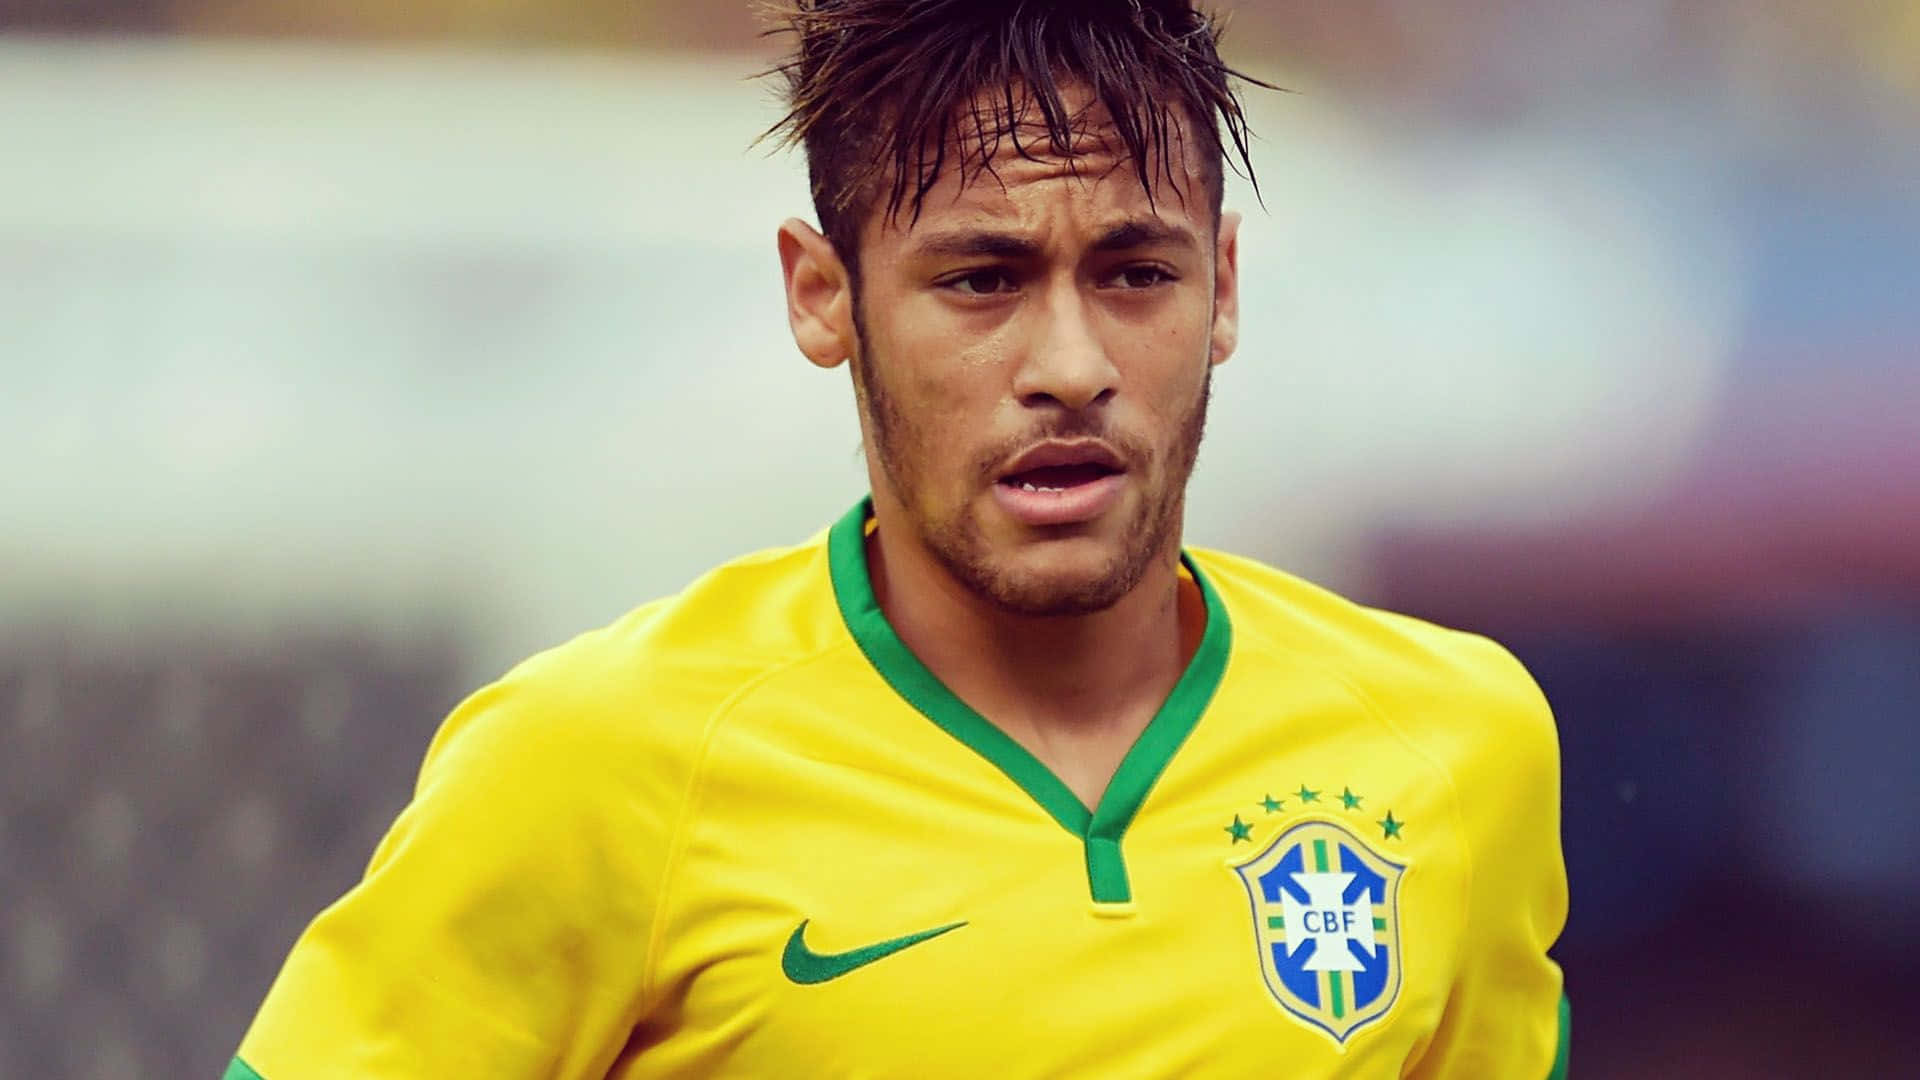 Le Foto Di Neymar